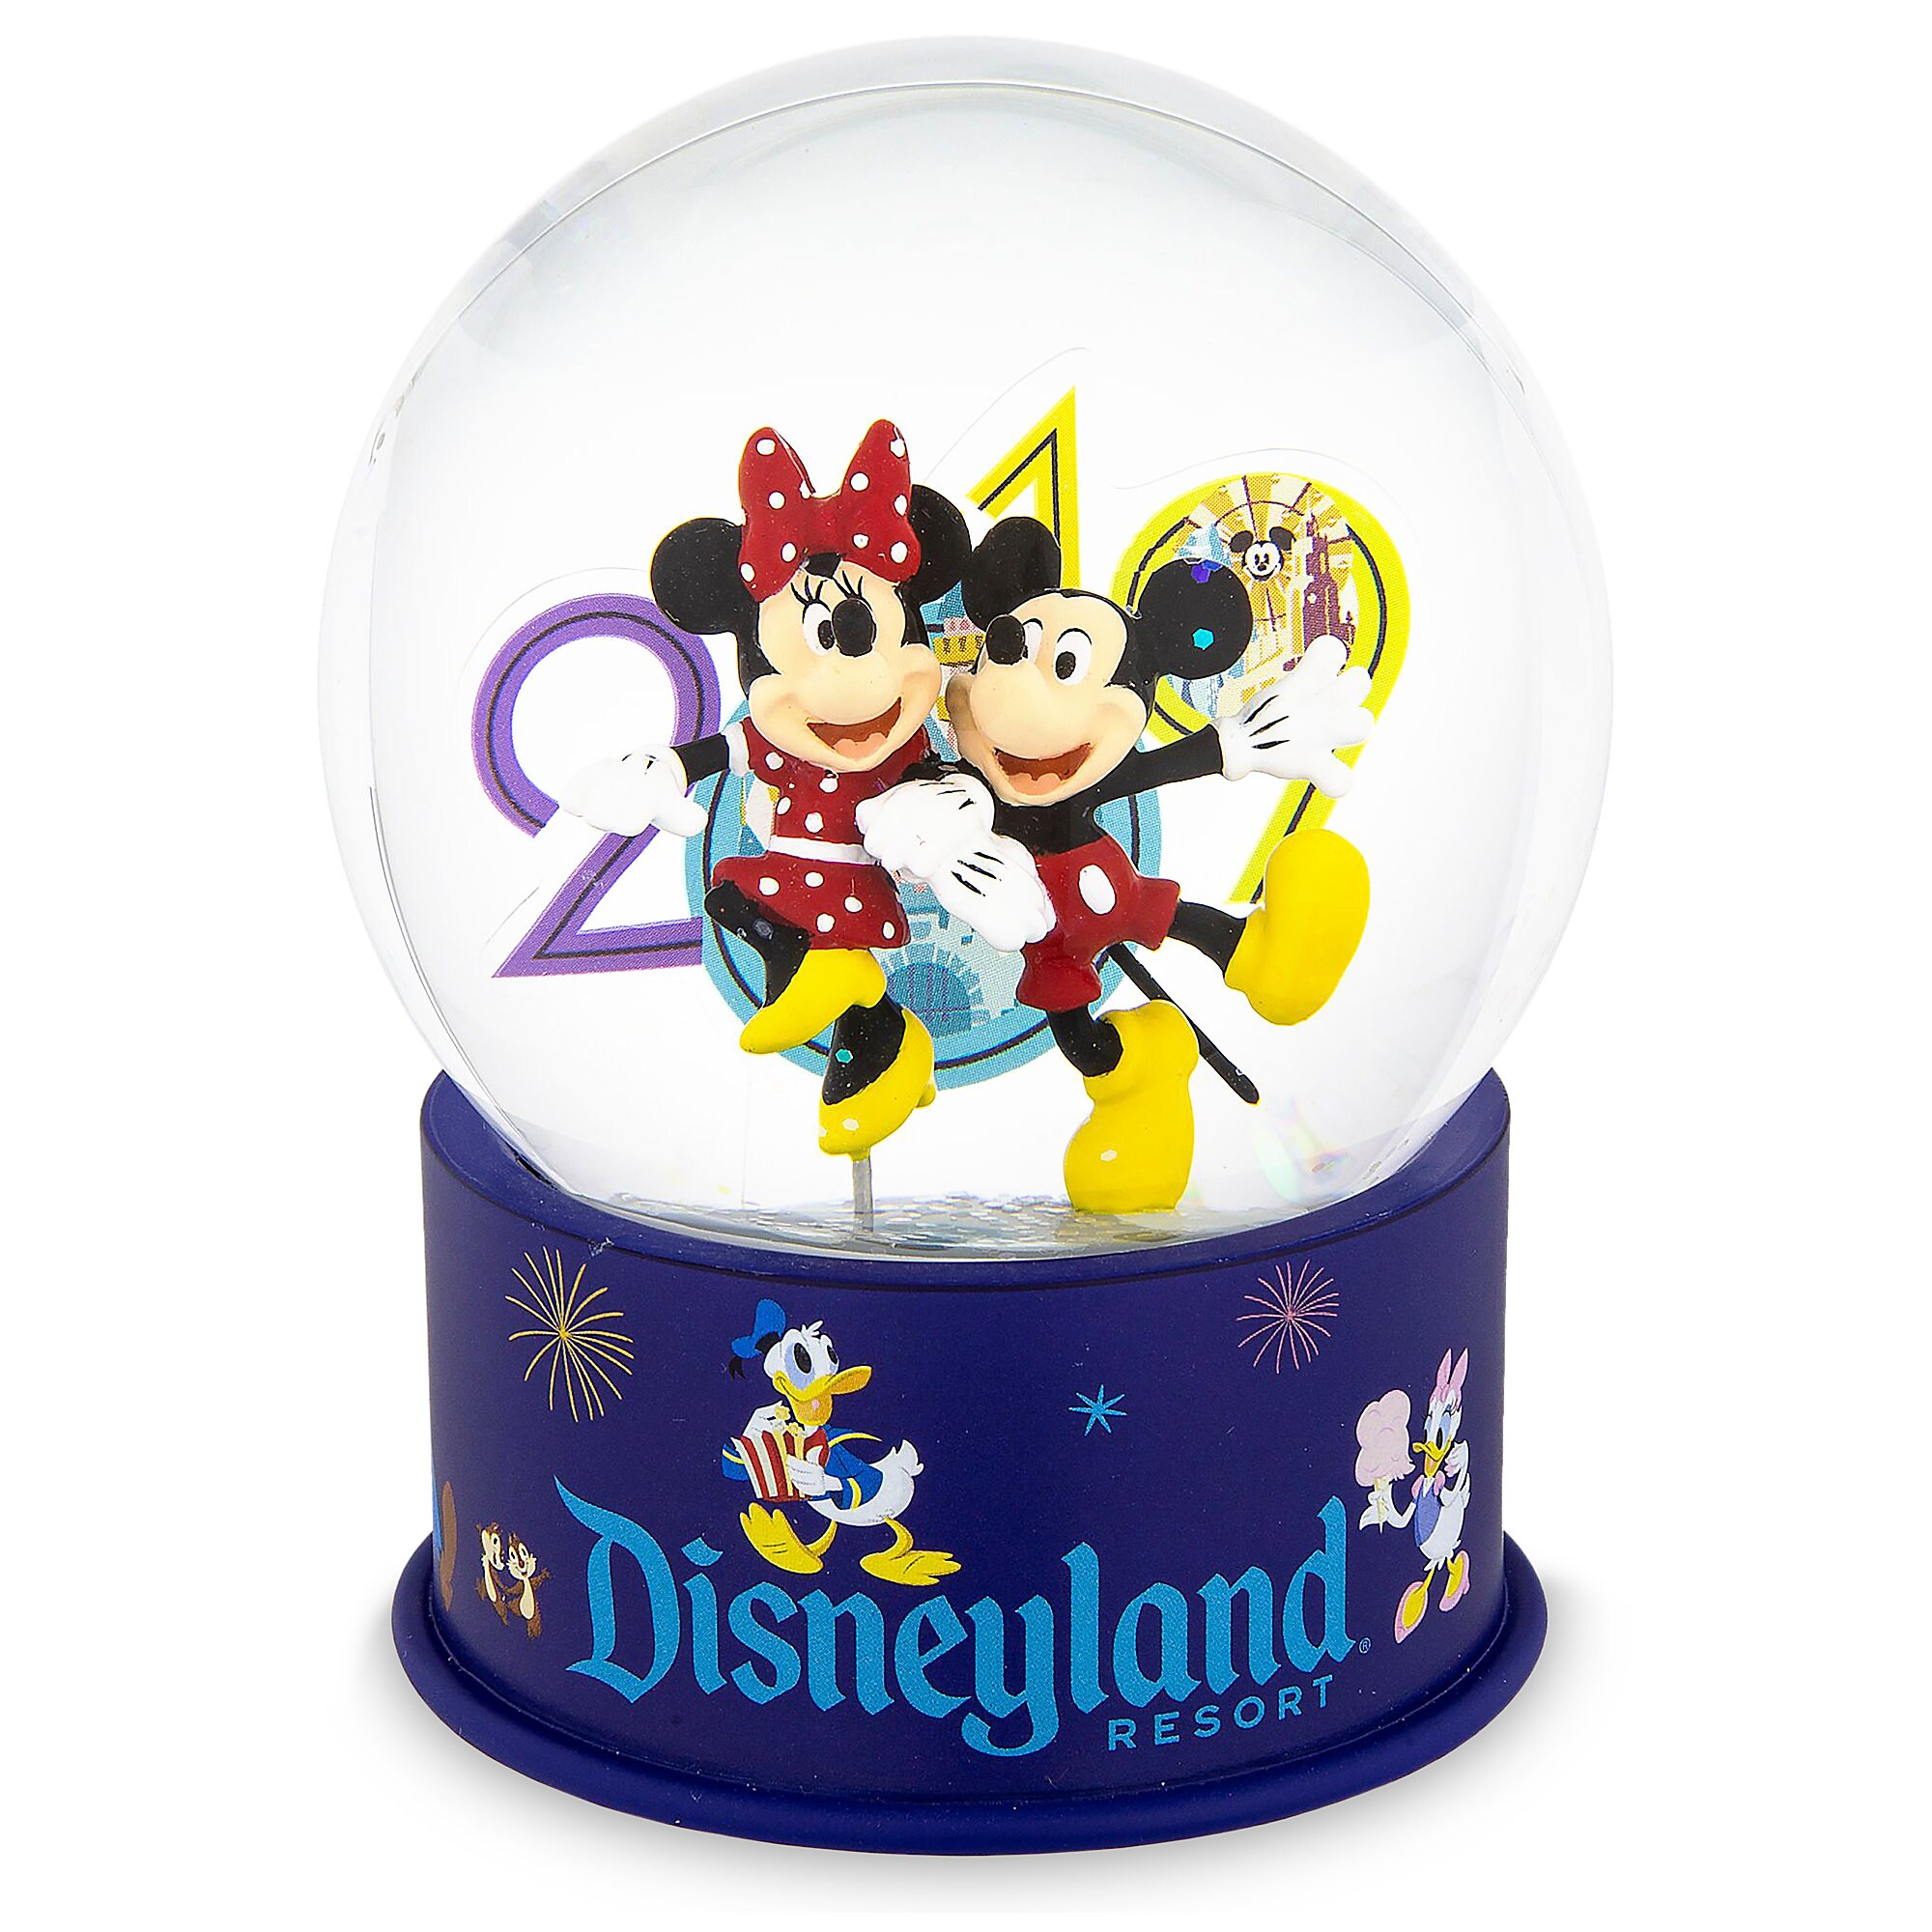 Mickey and Minnie Mouse Mini Snowglobe - Disneyland 2019